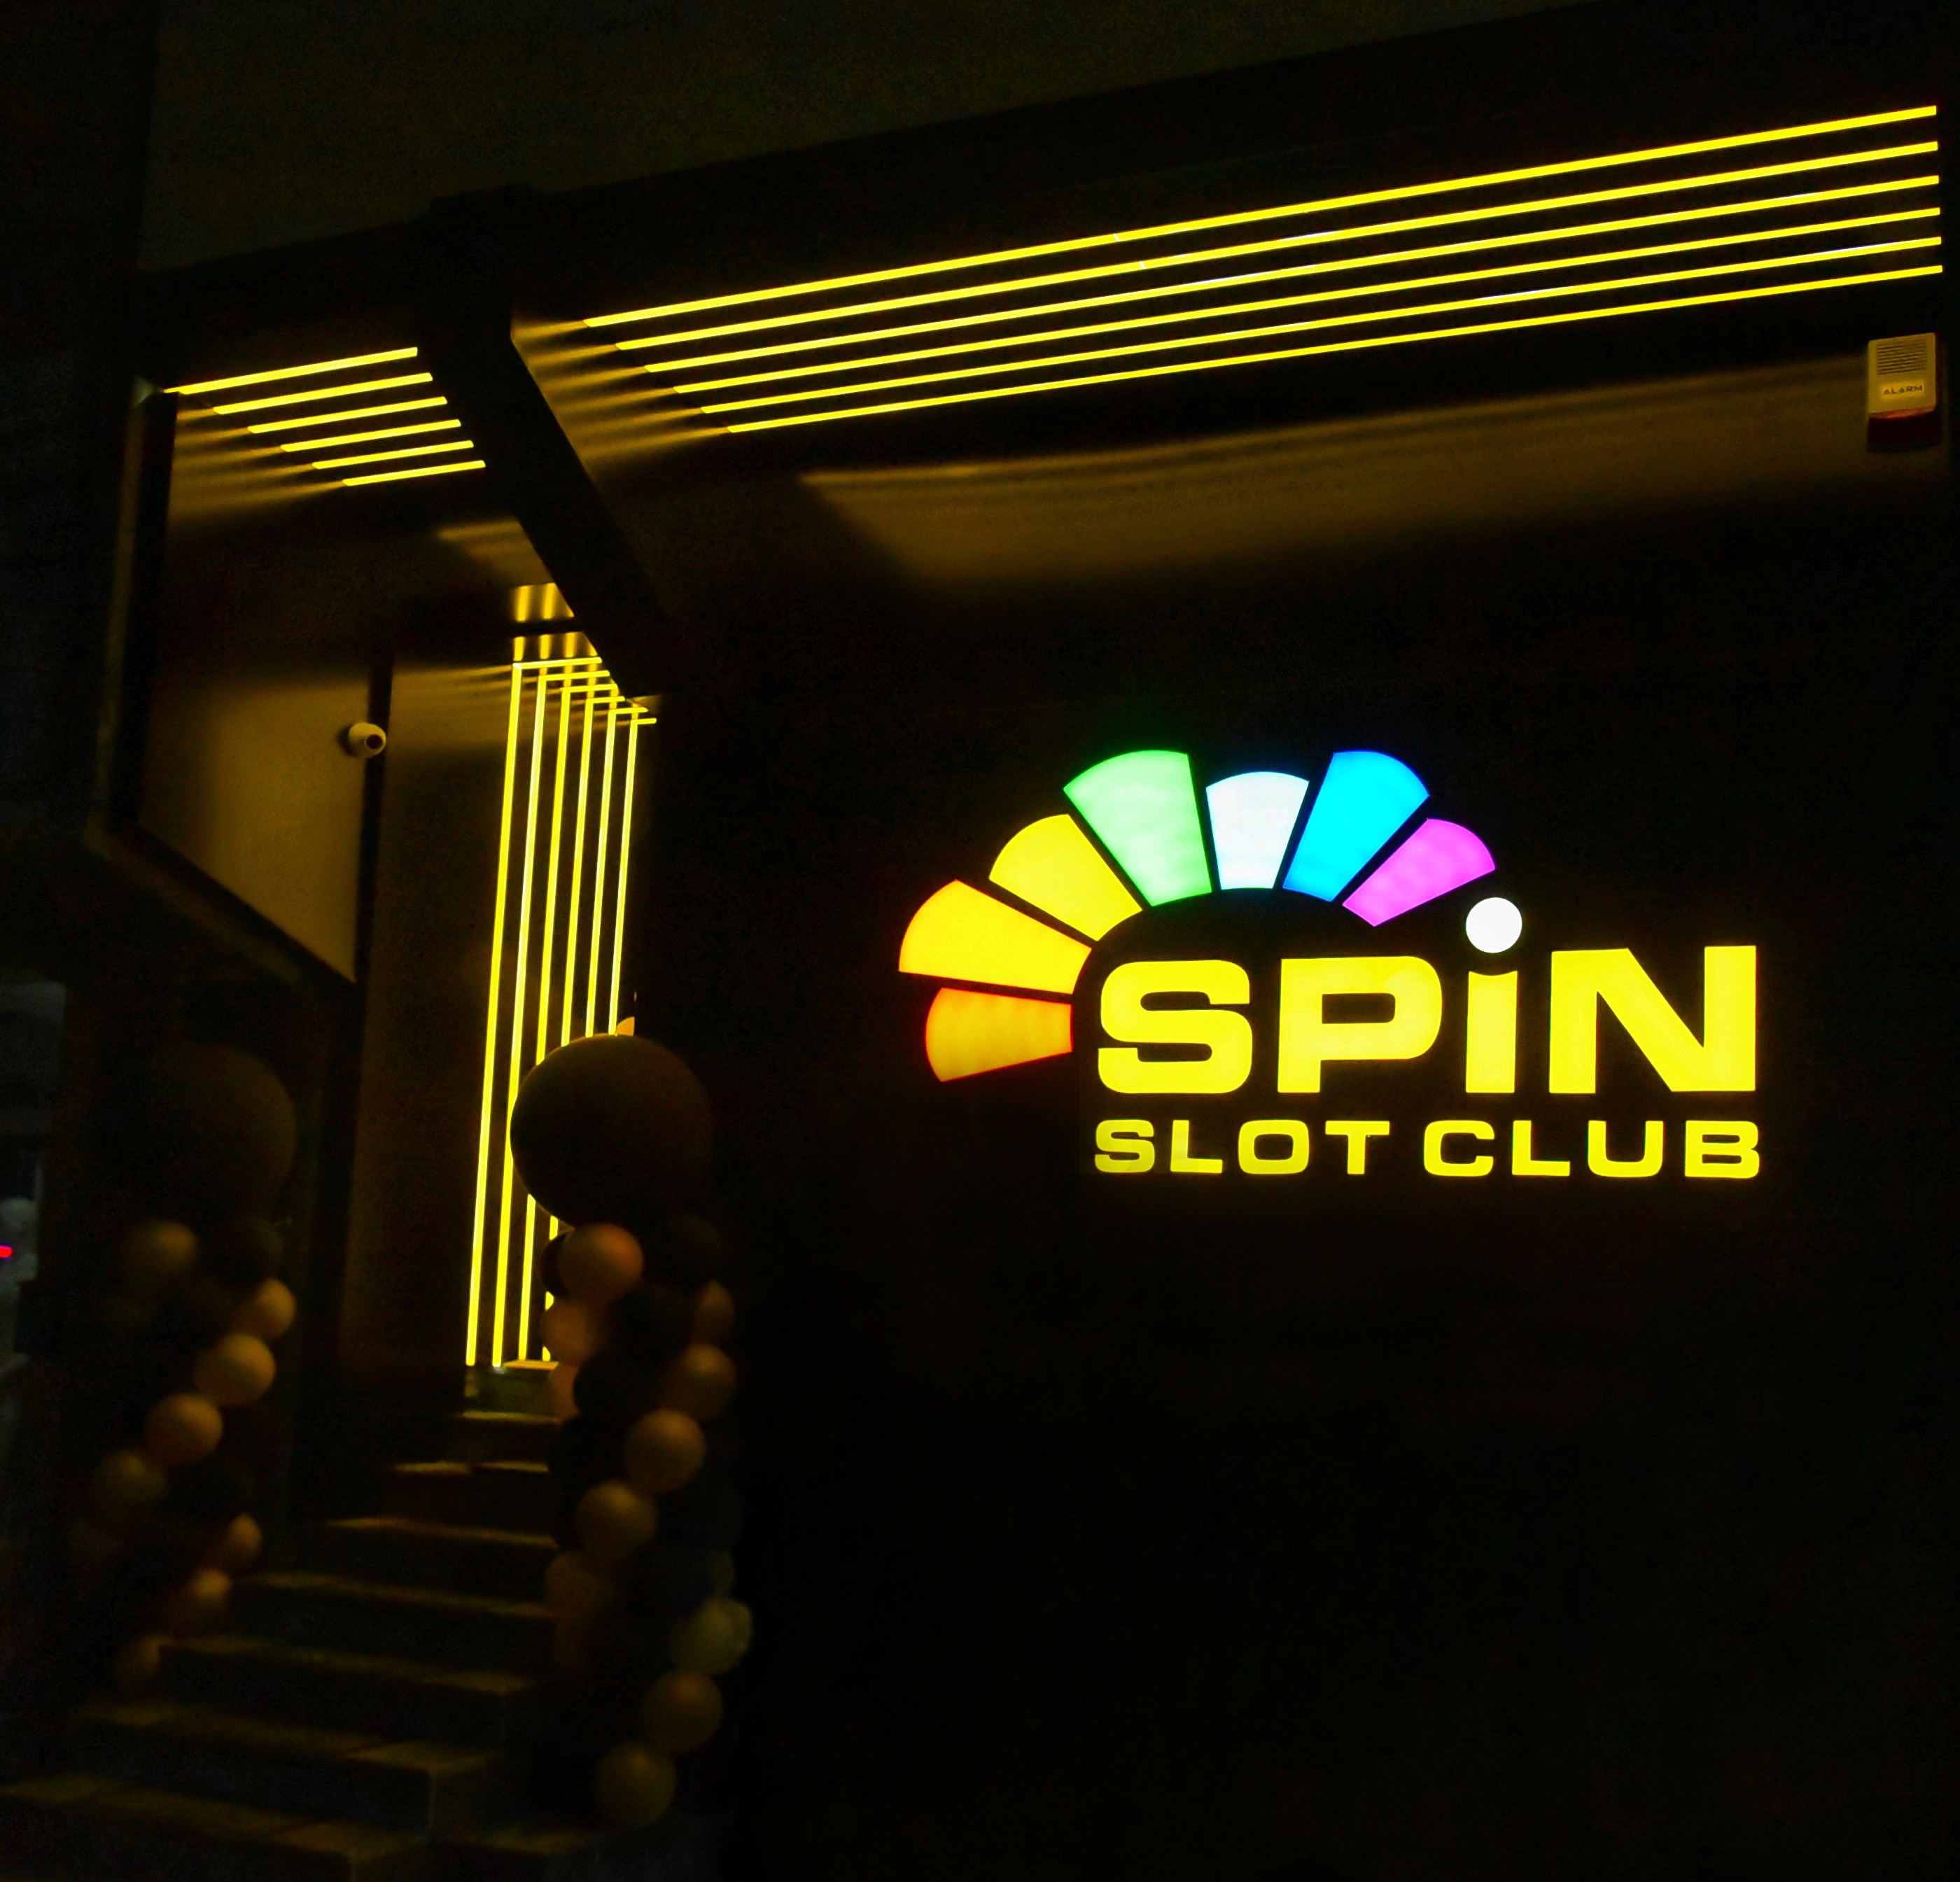 Spoljašnost Spin kazina Preševo 1, 15. Novembar 64B